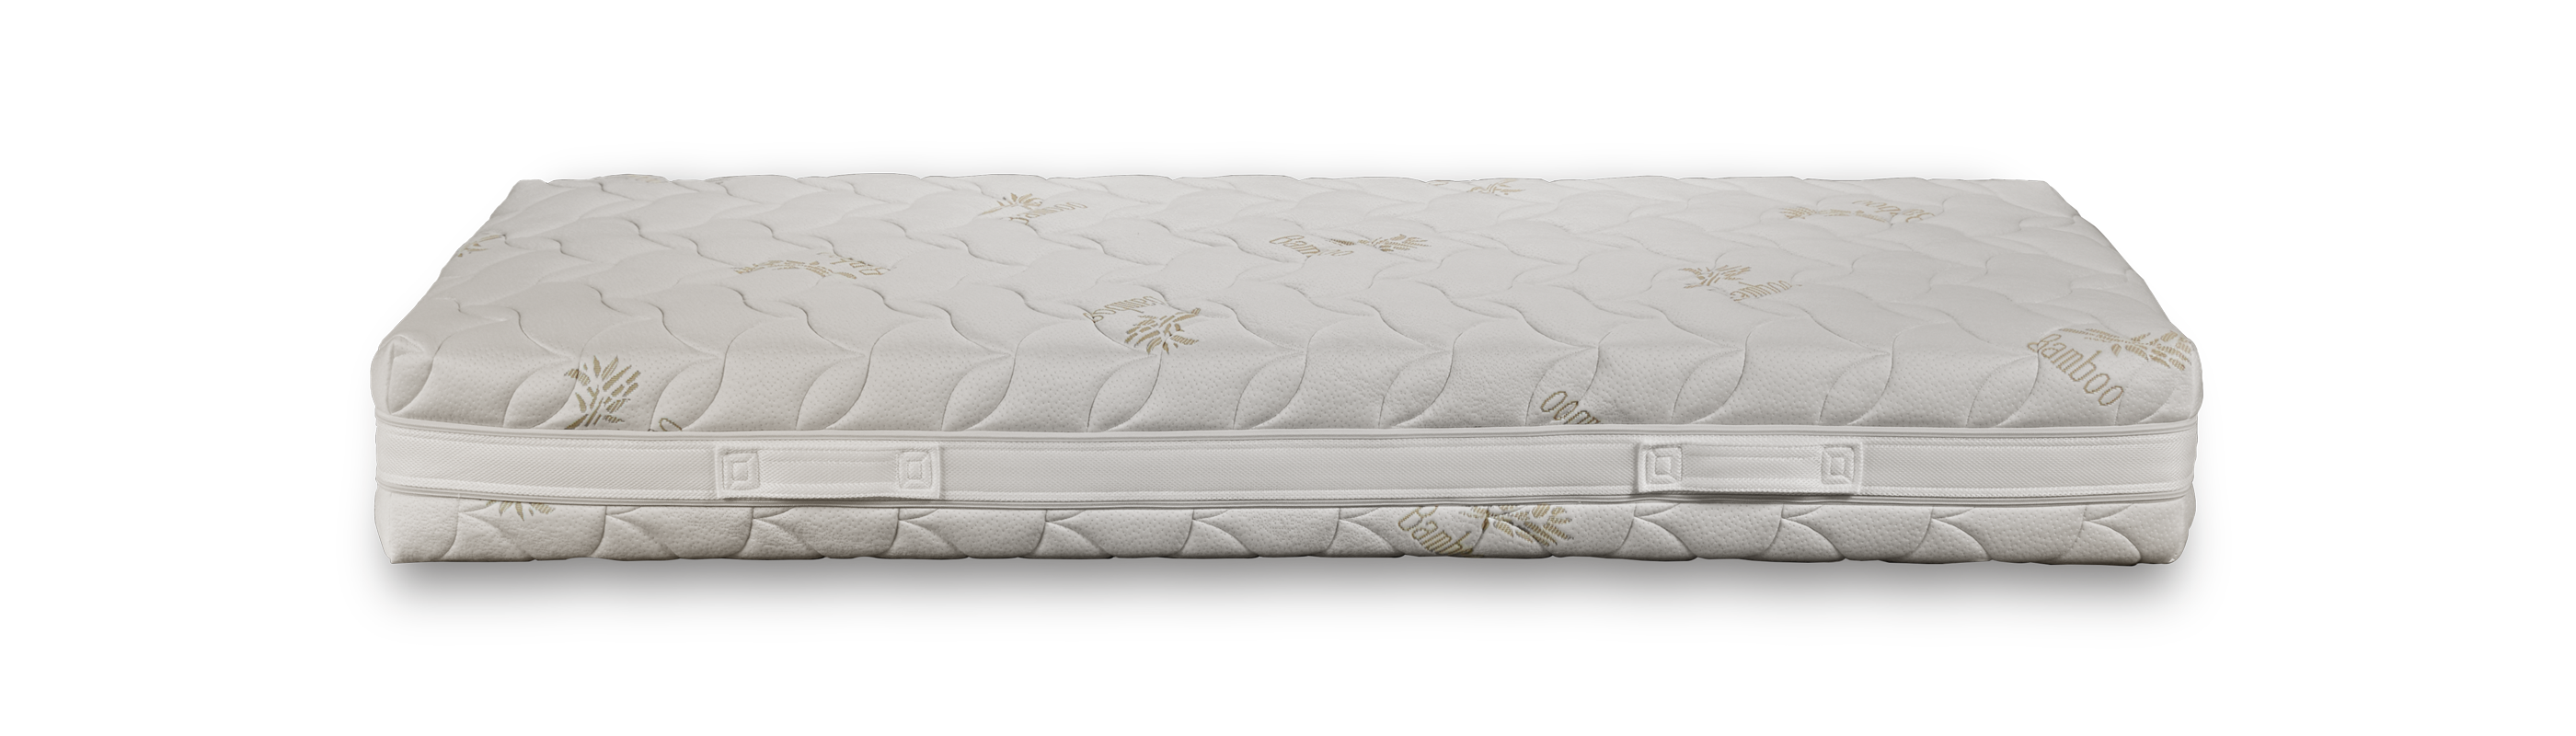 Soft and rigid viscoelastic mattress | Exclusive